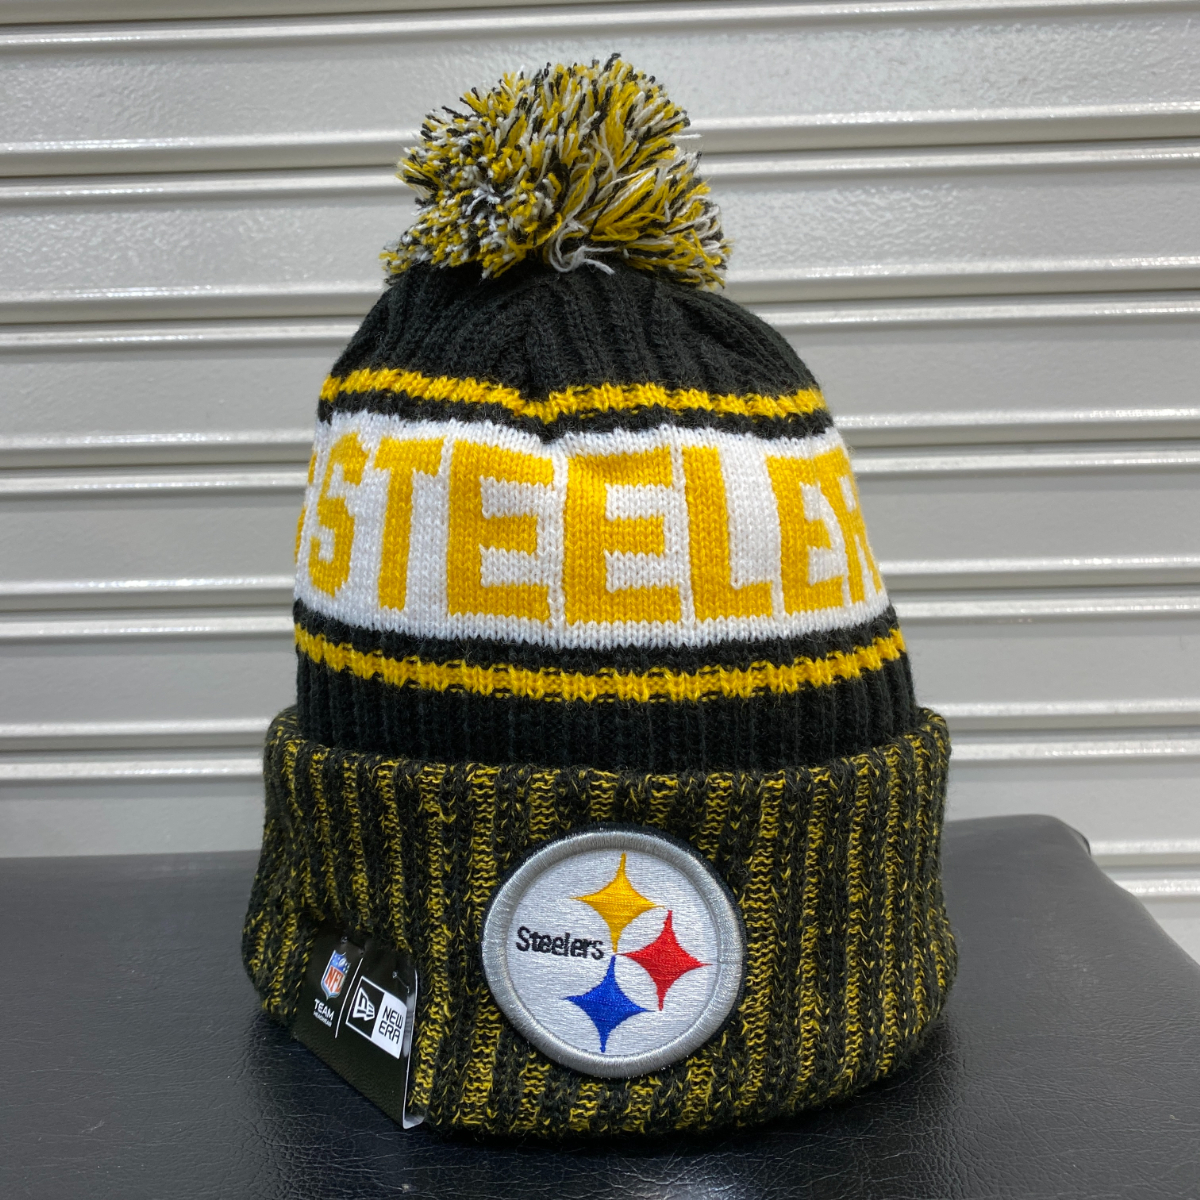 USA正規品 NEWERA ニューエラ NFL ピッツバーグ スティーラーズ Steelers 黒 黄色 ニット帽 ポンポン付き ニットキャップ 極暖 フリース